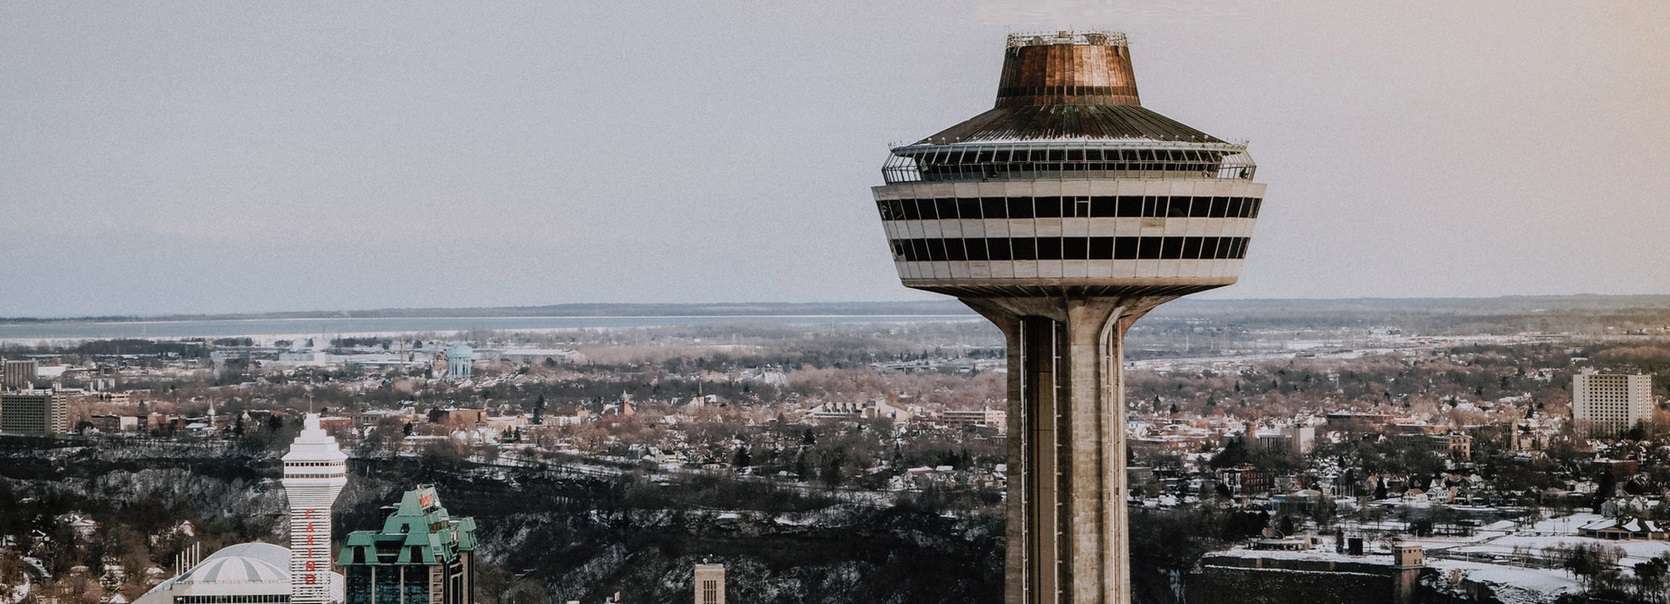 Skylon Tower in Niagara Falls